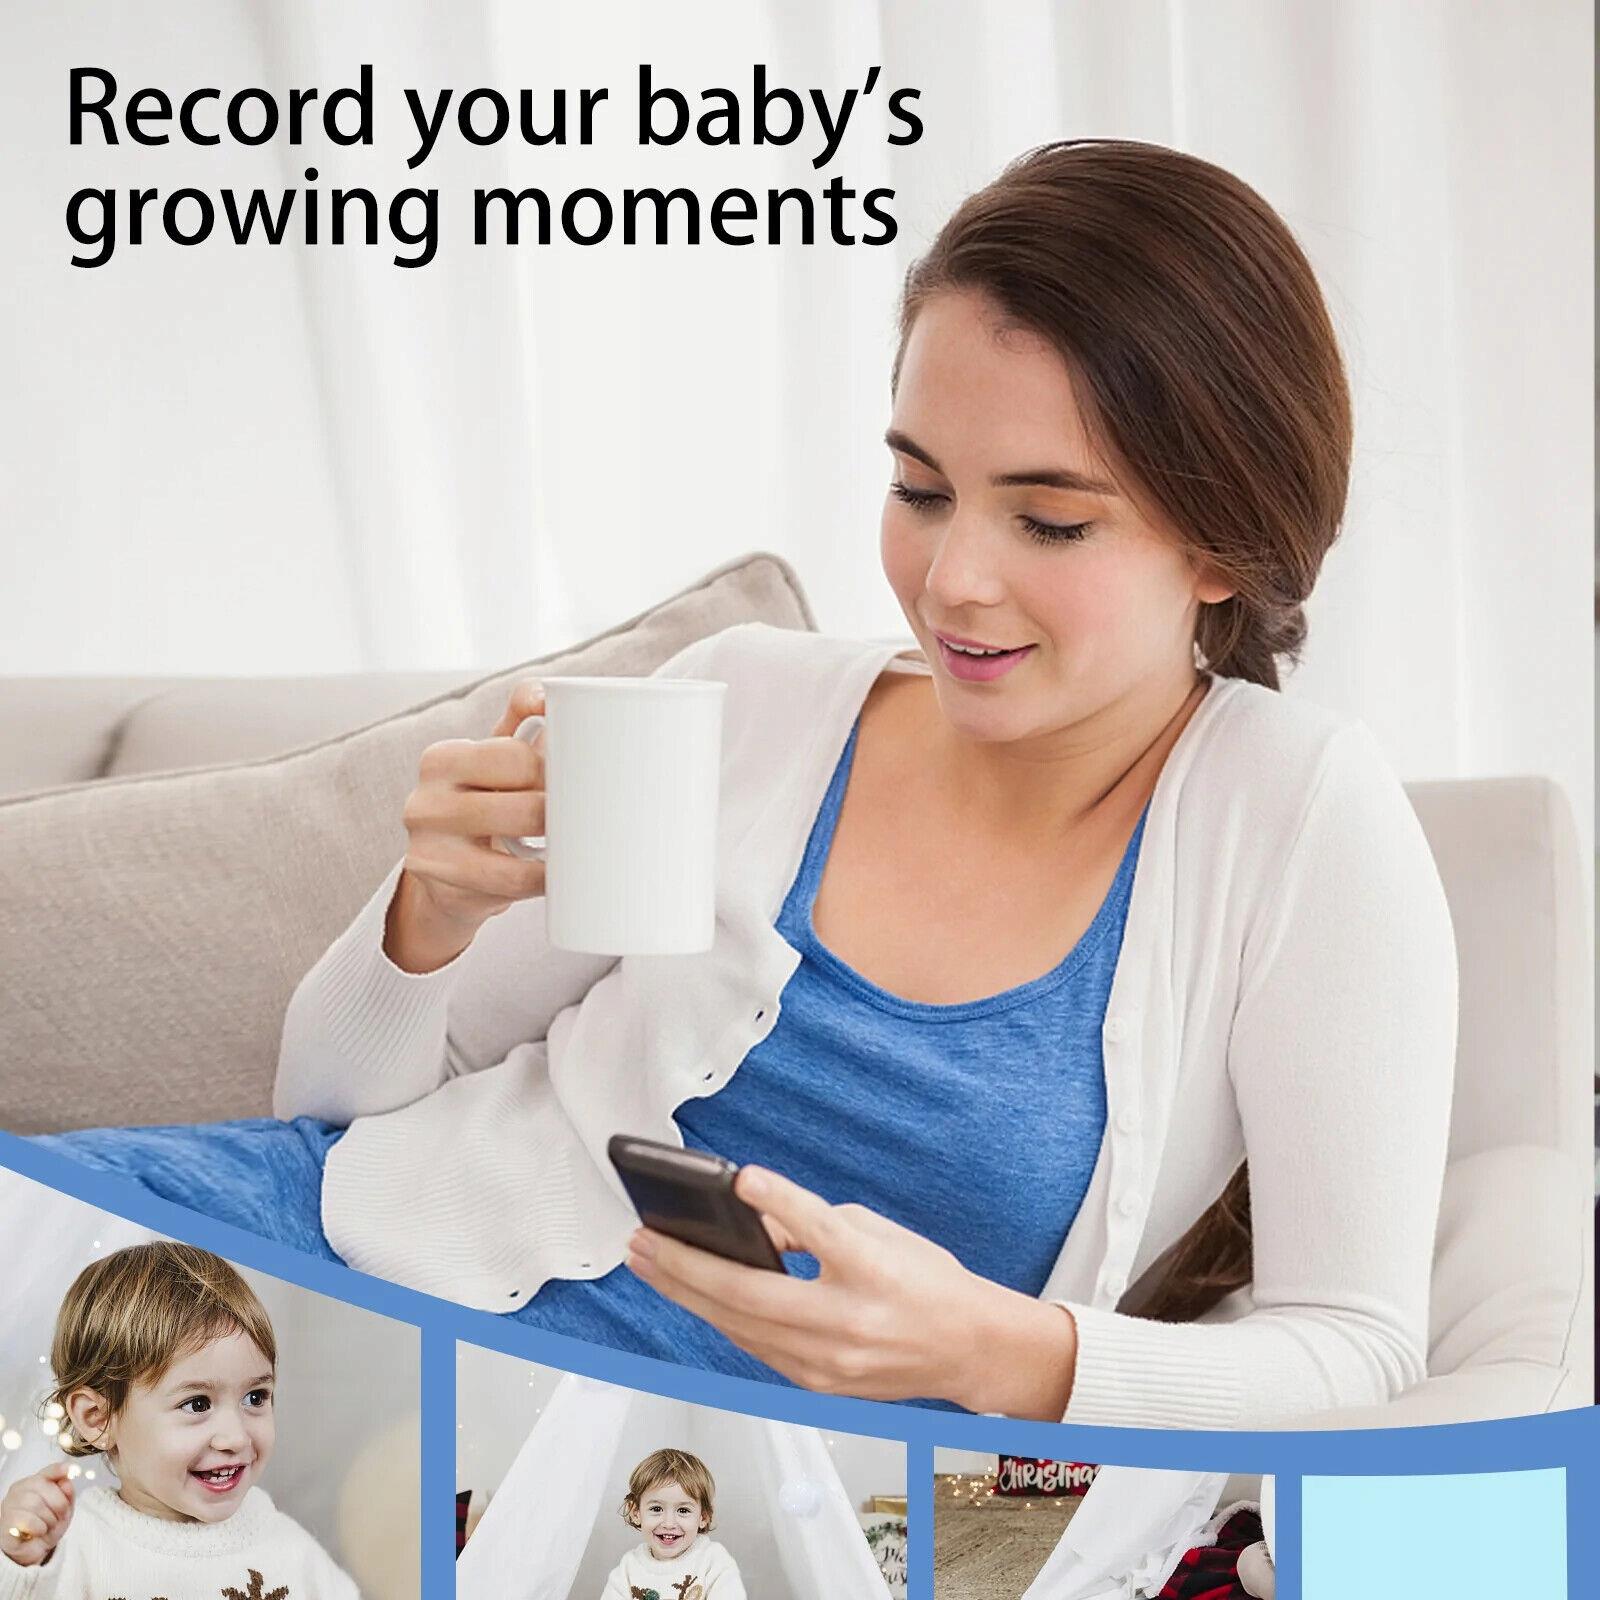 Arenti Alnanny-3 Baby Monitor Kit